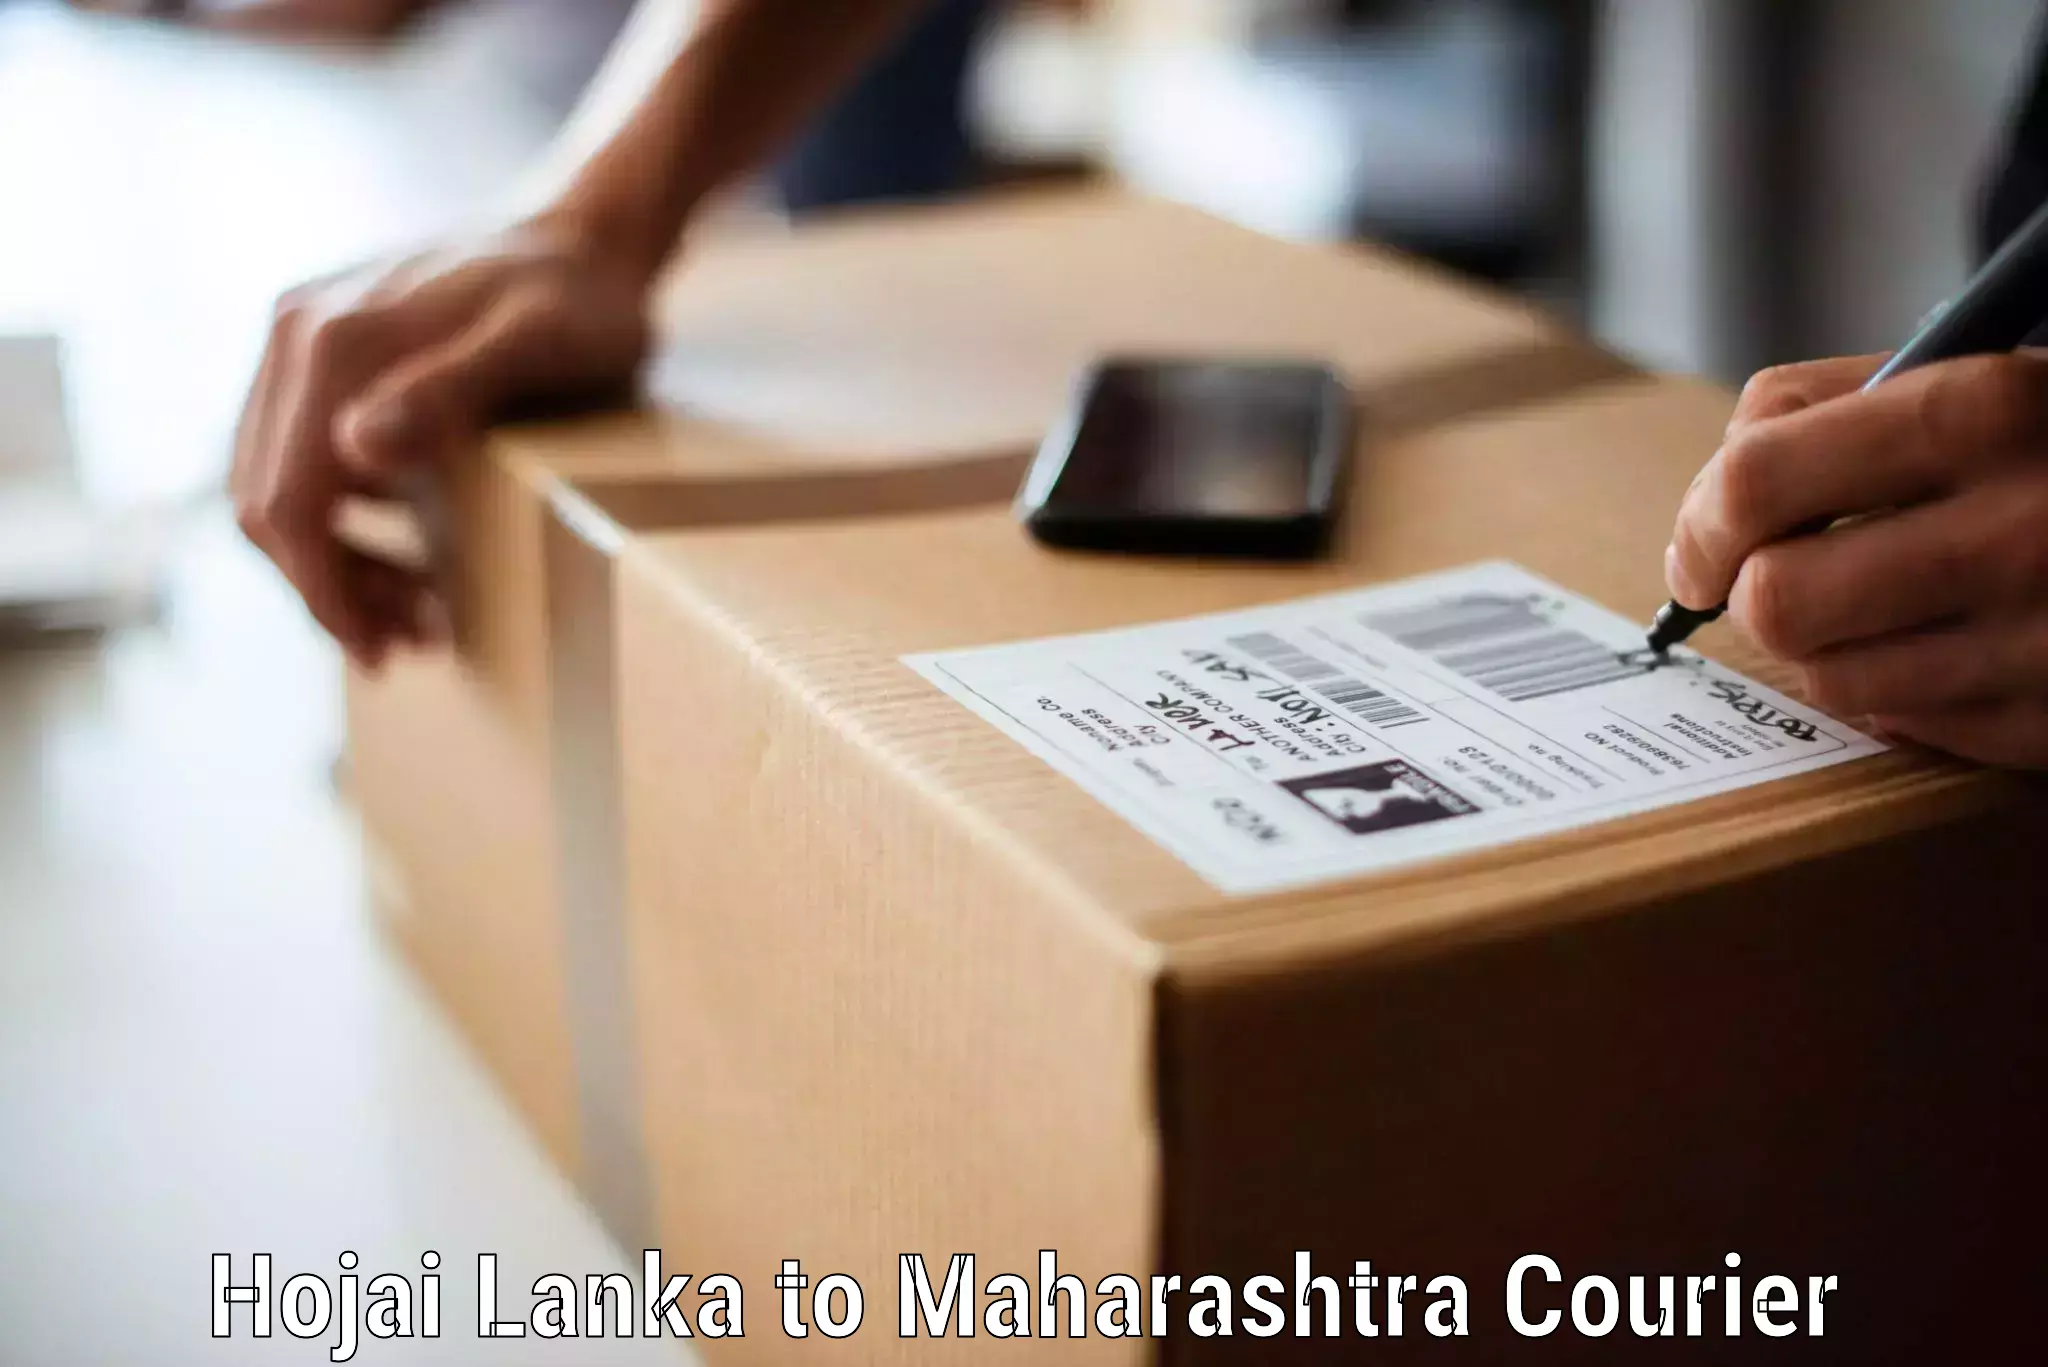 Furniture transport solutions Hojai Lanka to Mumbai Port